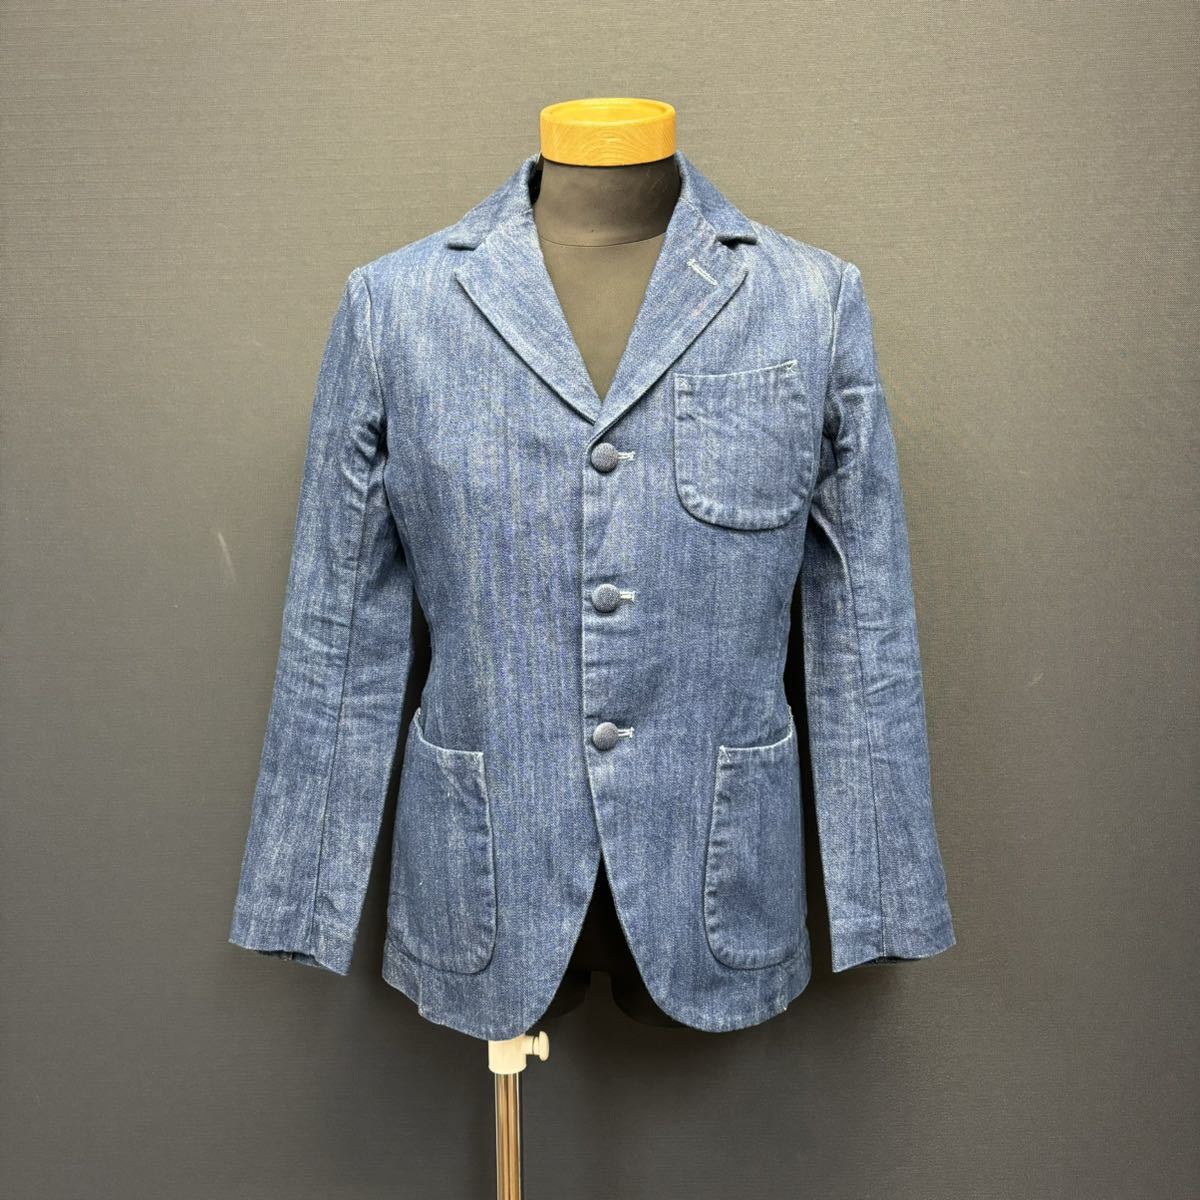 EVISU Madison Jacket Evisu Madison jacket size 32 indigo /b lumen z outer 